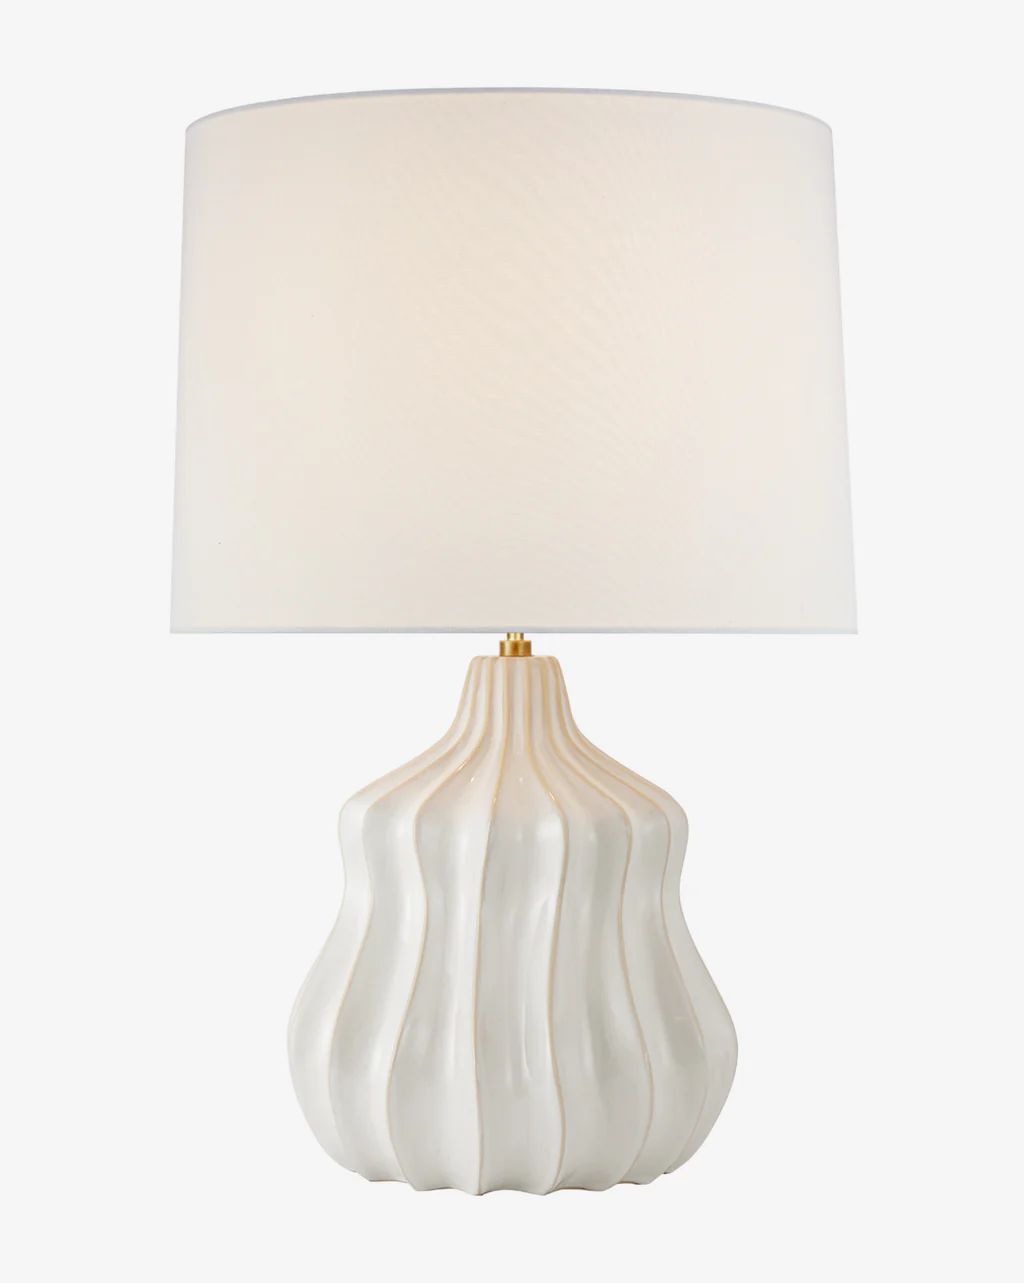 Ebb Table Lamp | McGee & Co.